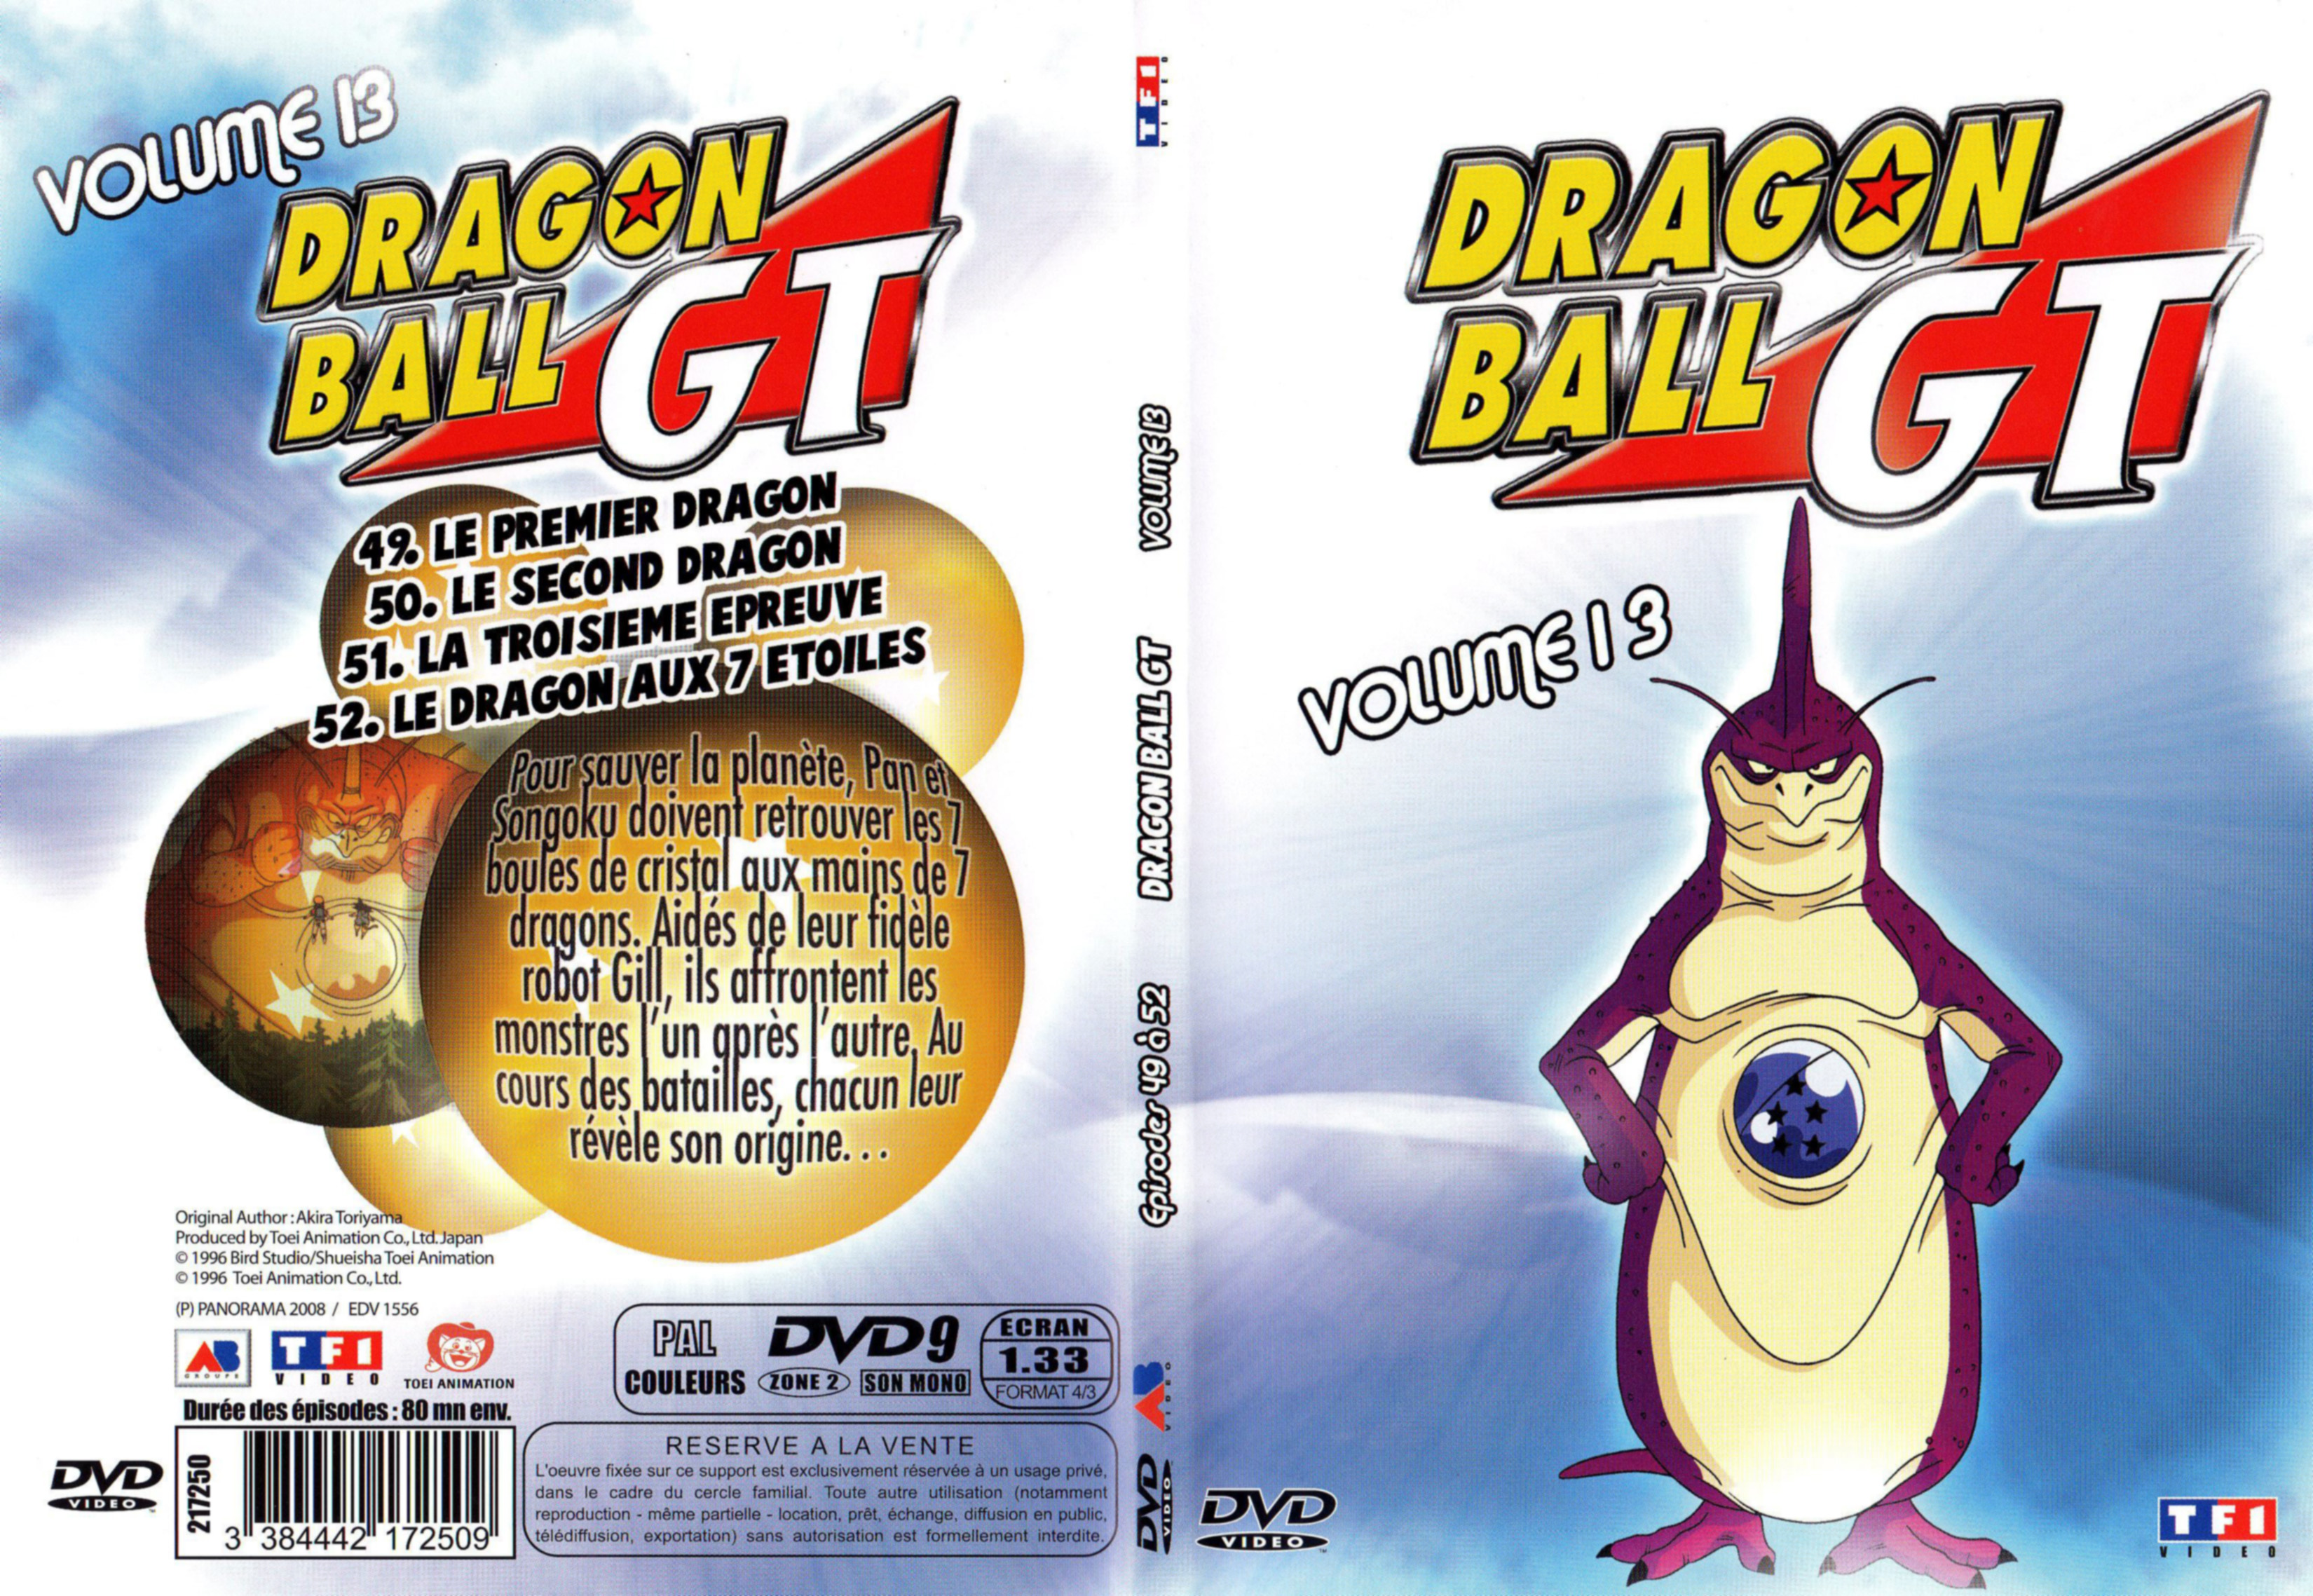 Jaquette DVD Dragon ball GT vol 13